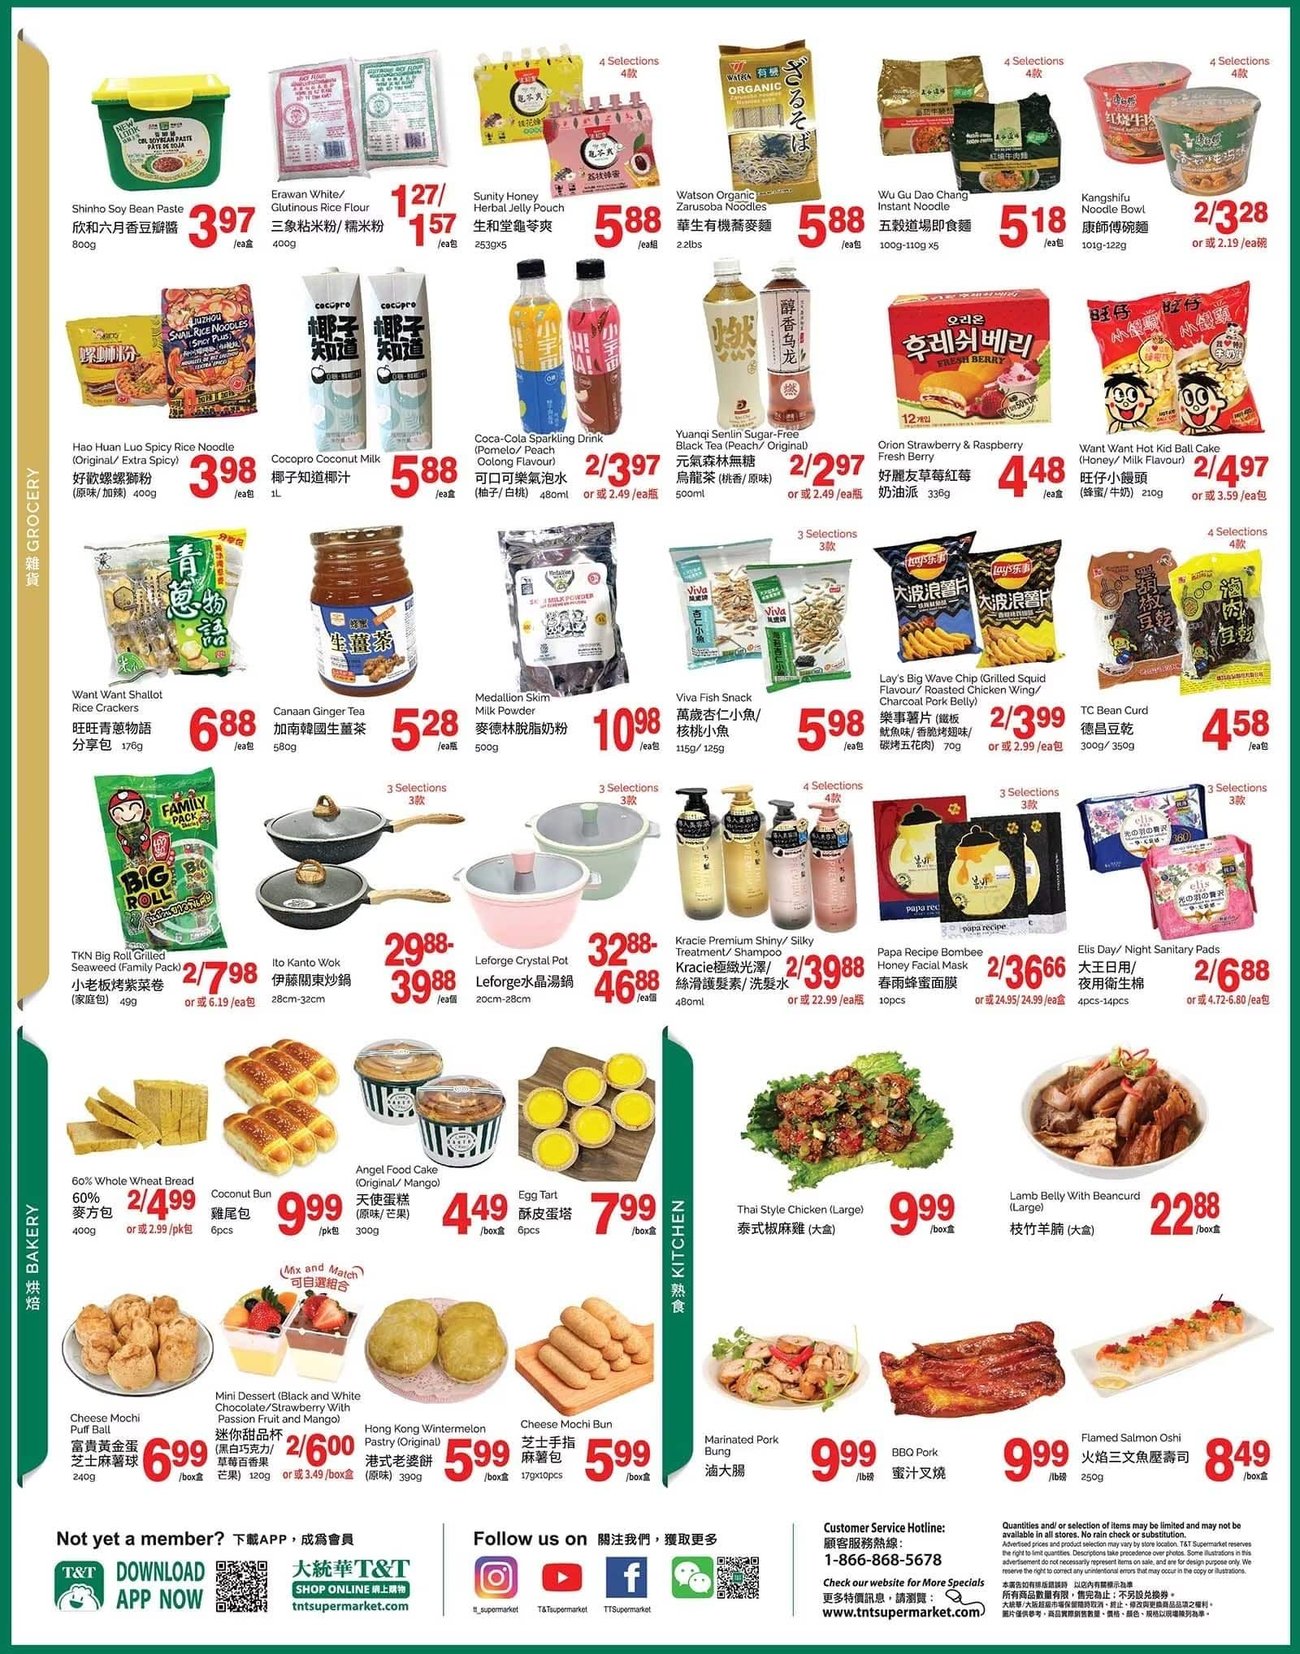 T & T Supermarket - Alberta - Weekly Flyer Specials - Page 3